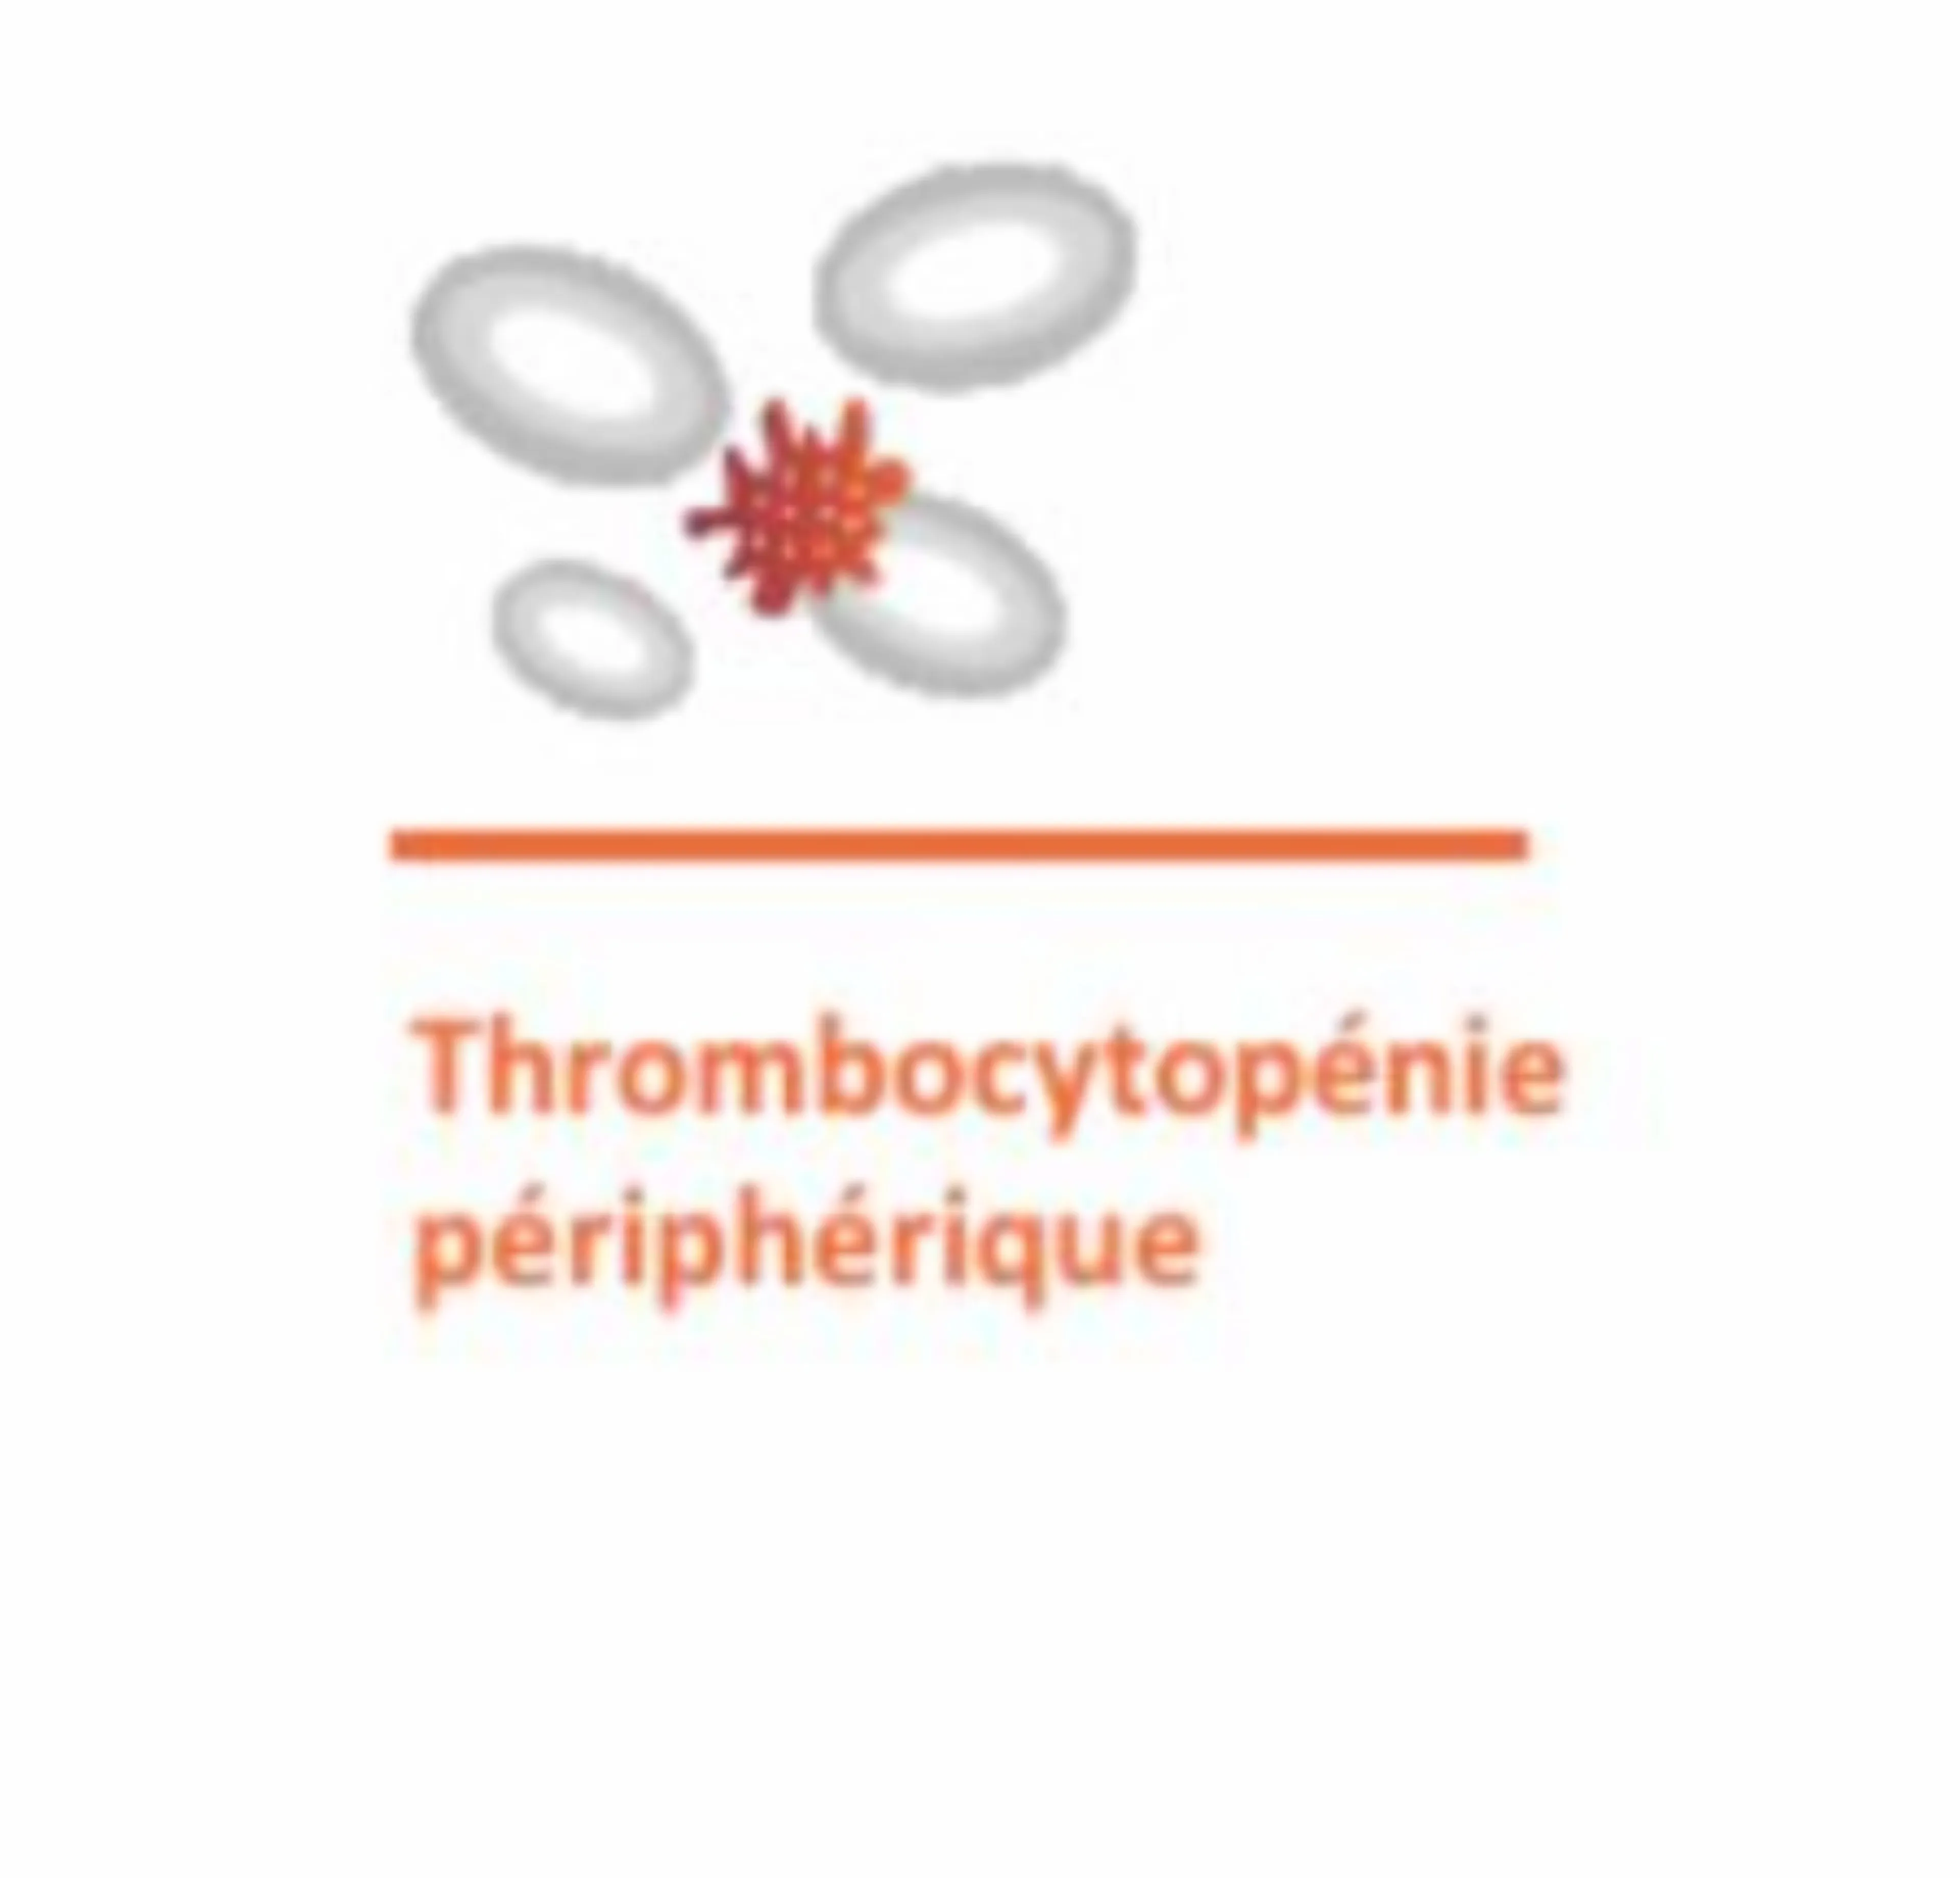 thrombocytopenie-peripherique